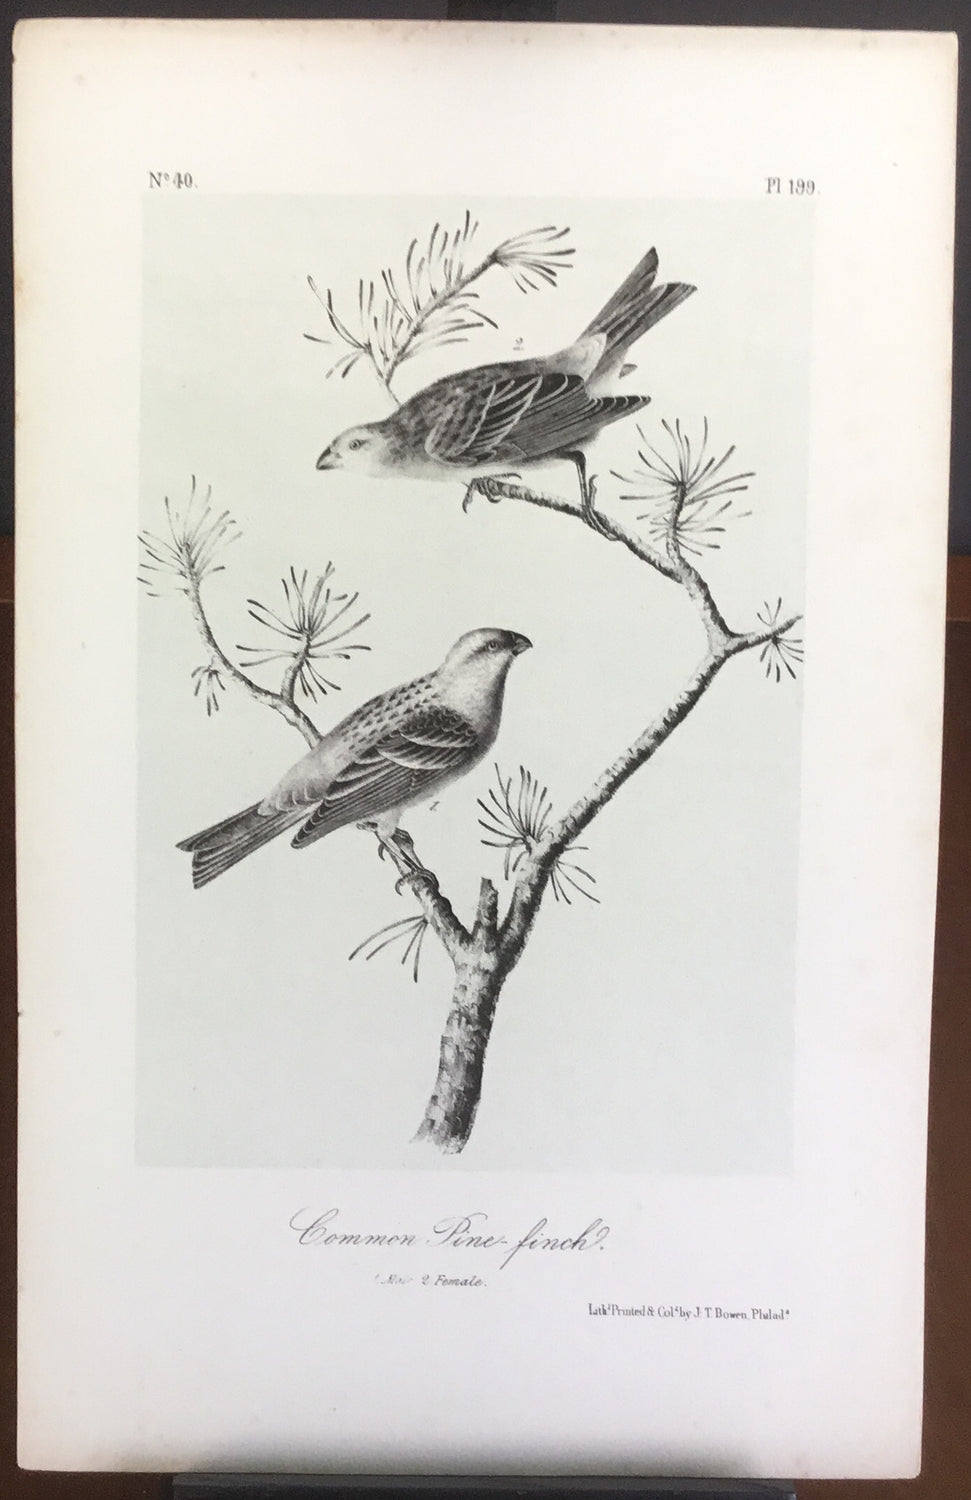 Audubon Octavo Common Pine Finch, plate 199, uncolored test sheet, 7 x 11